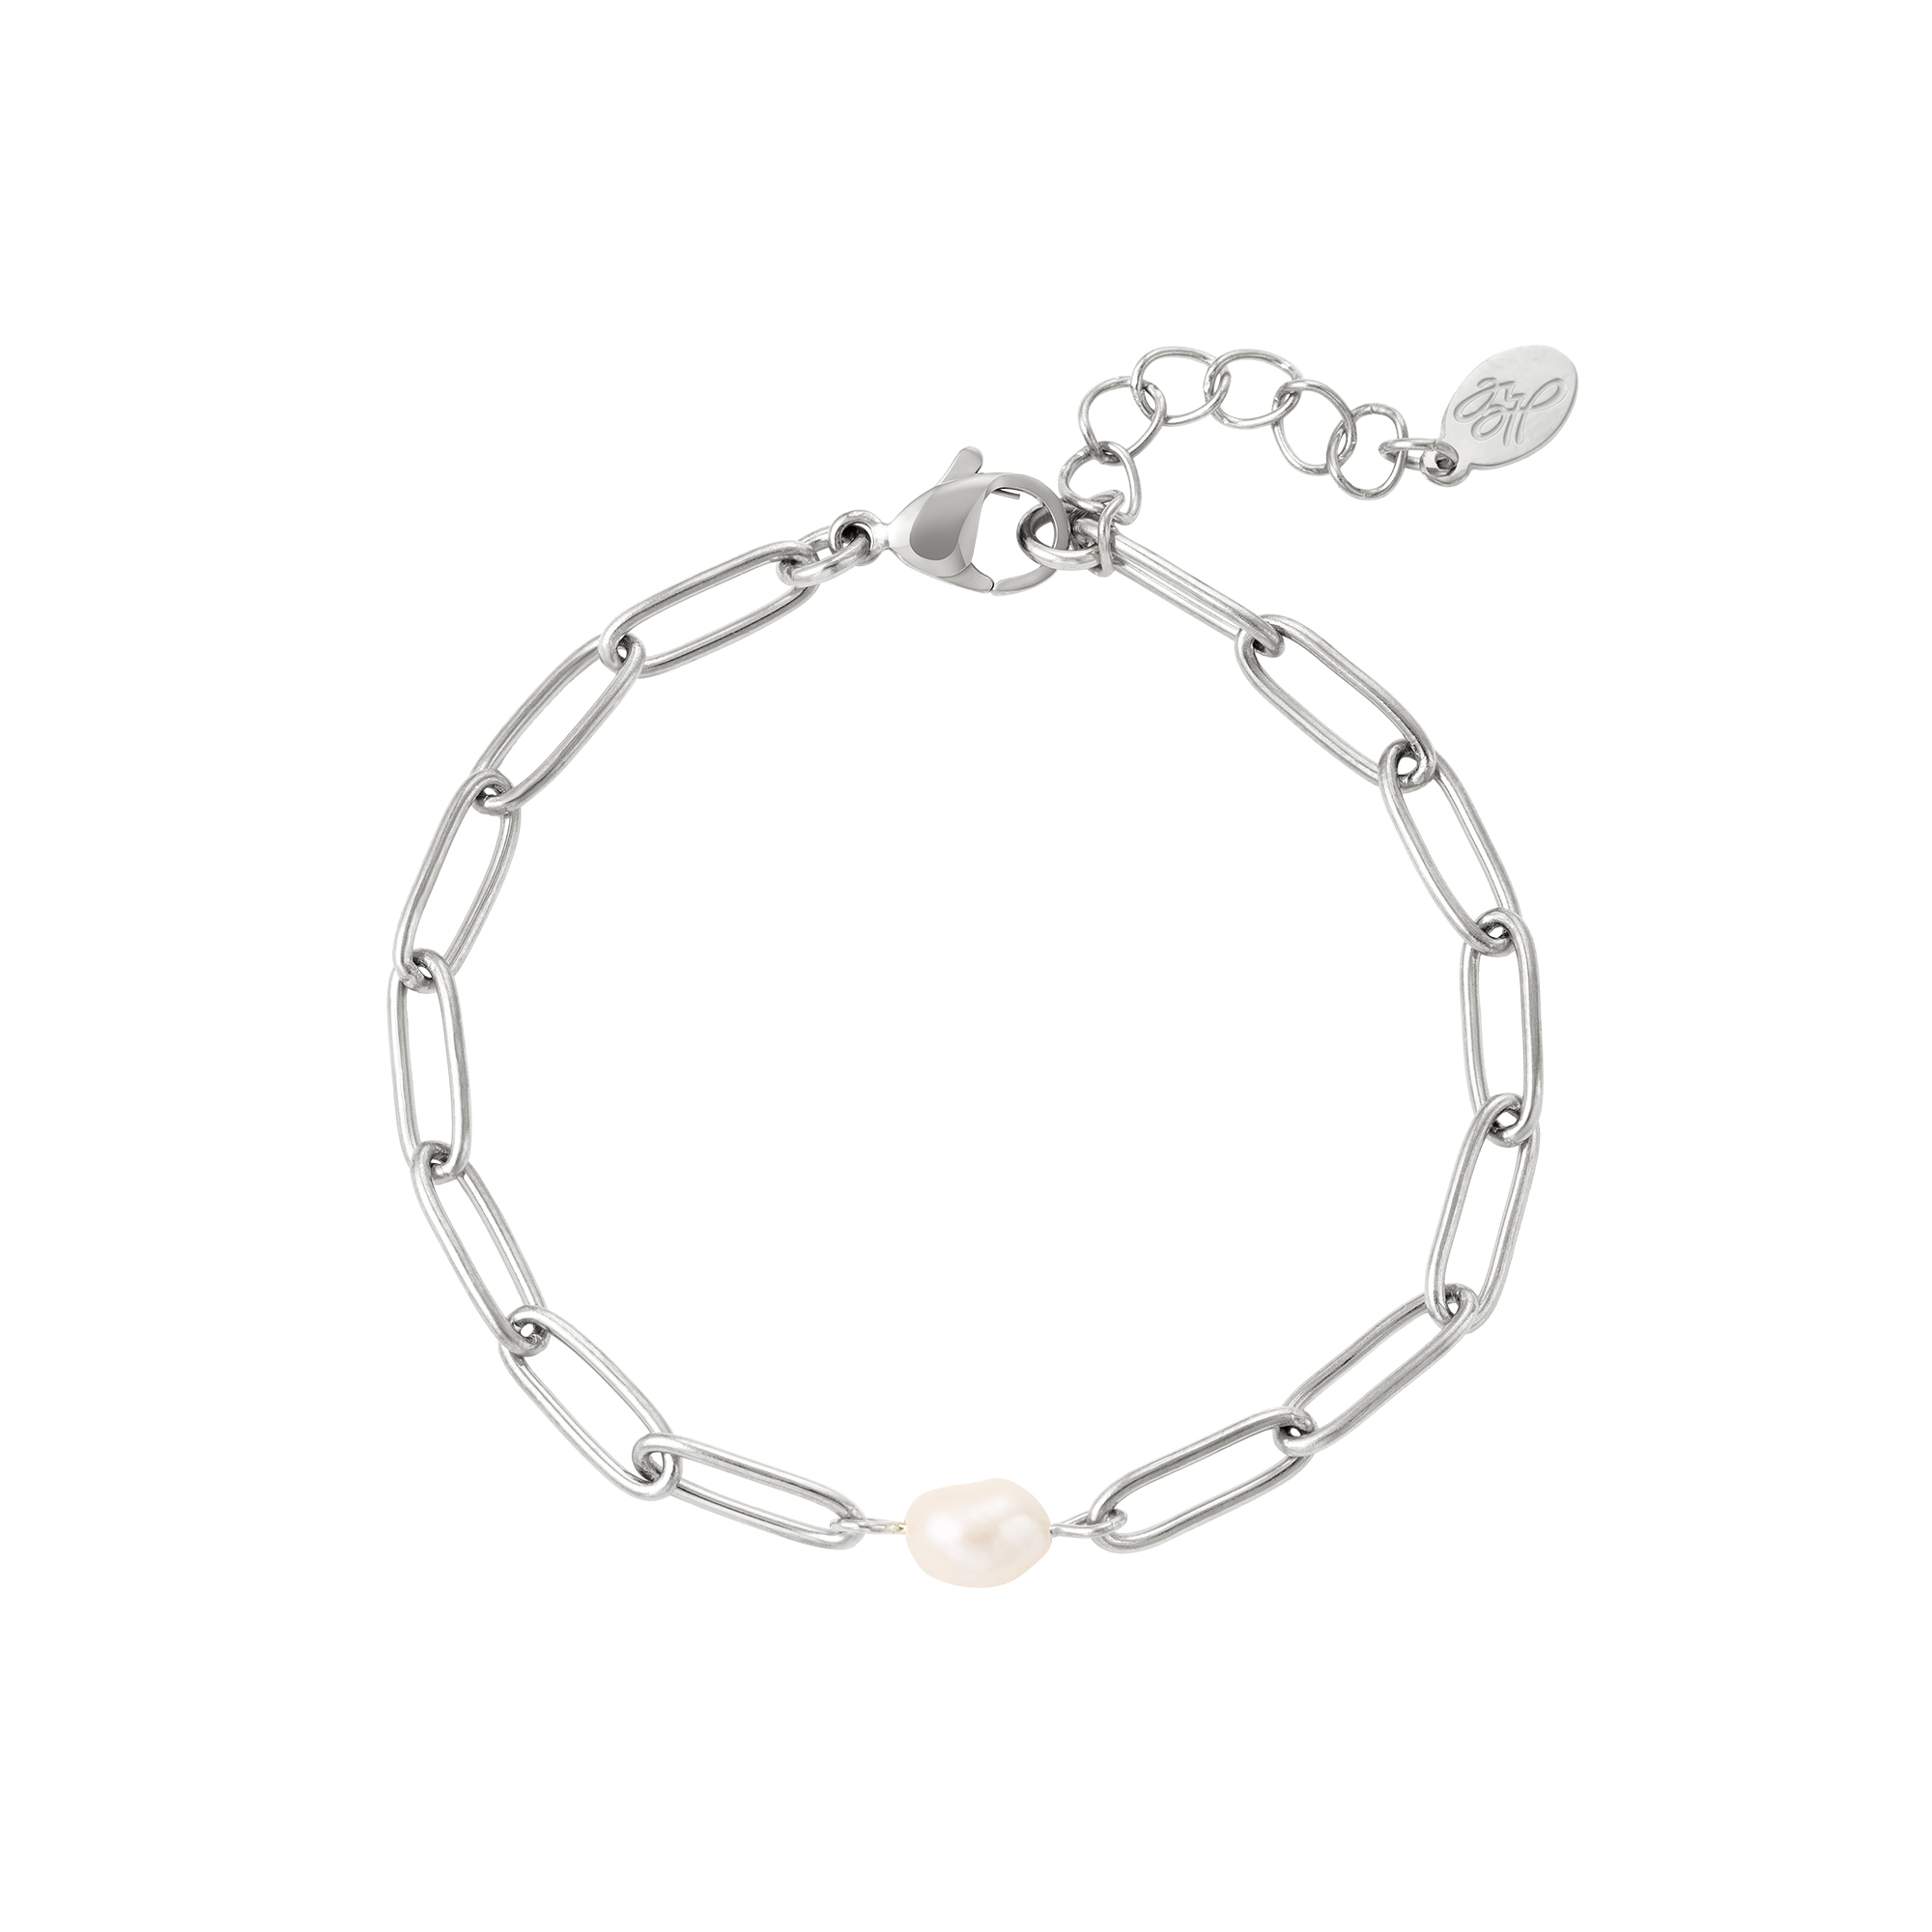 Bracelet chaîne ovale avec perle